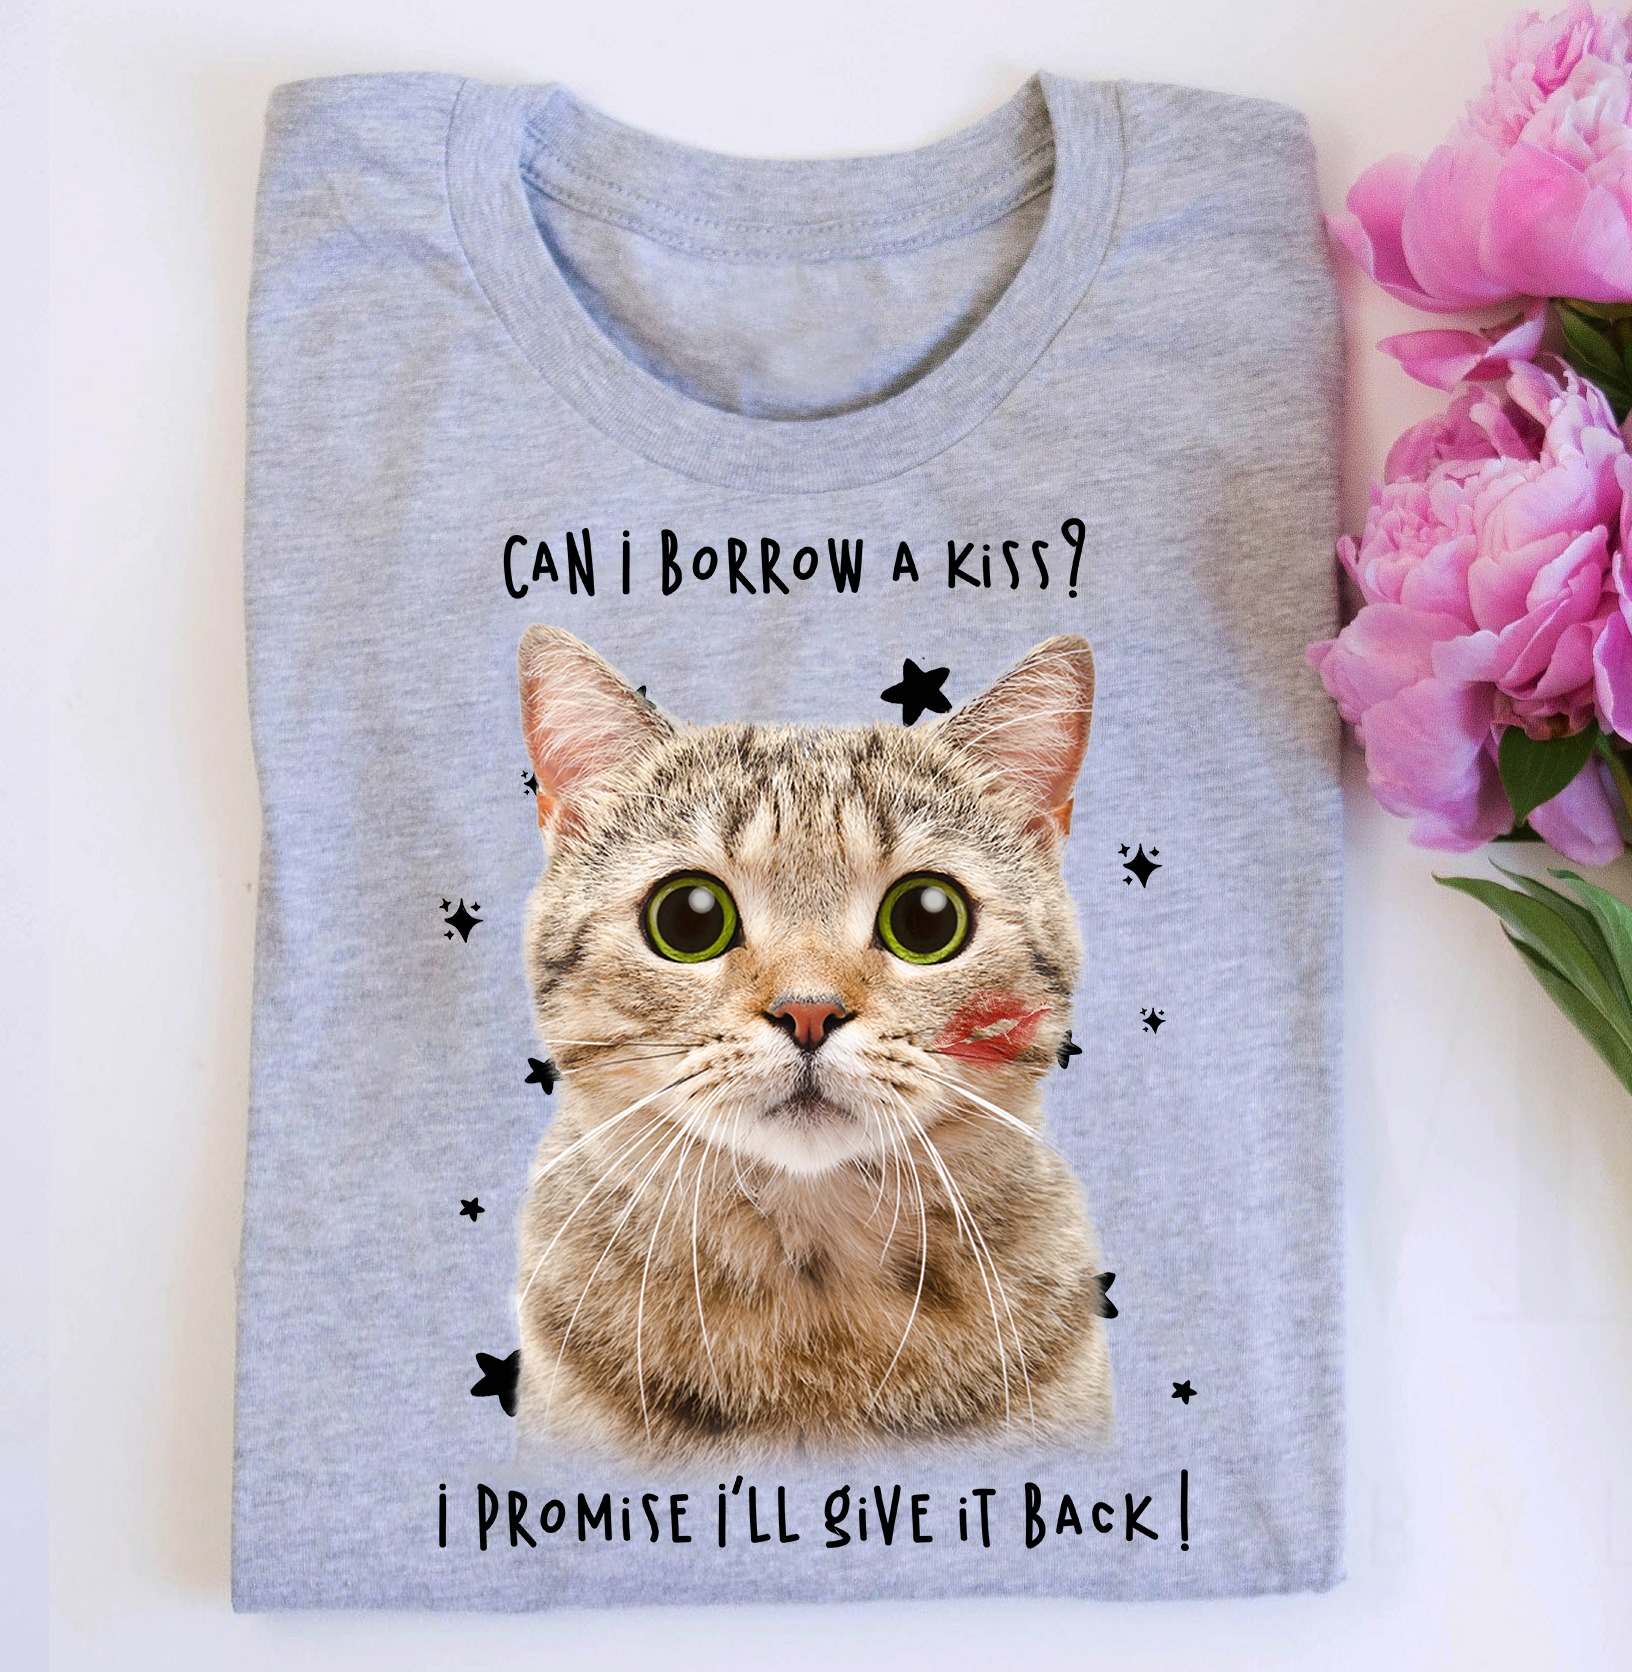 Can i borrow a kiss i promise i'll give it back! - Cute cat, cat lover